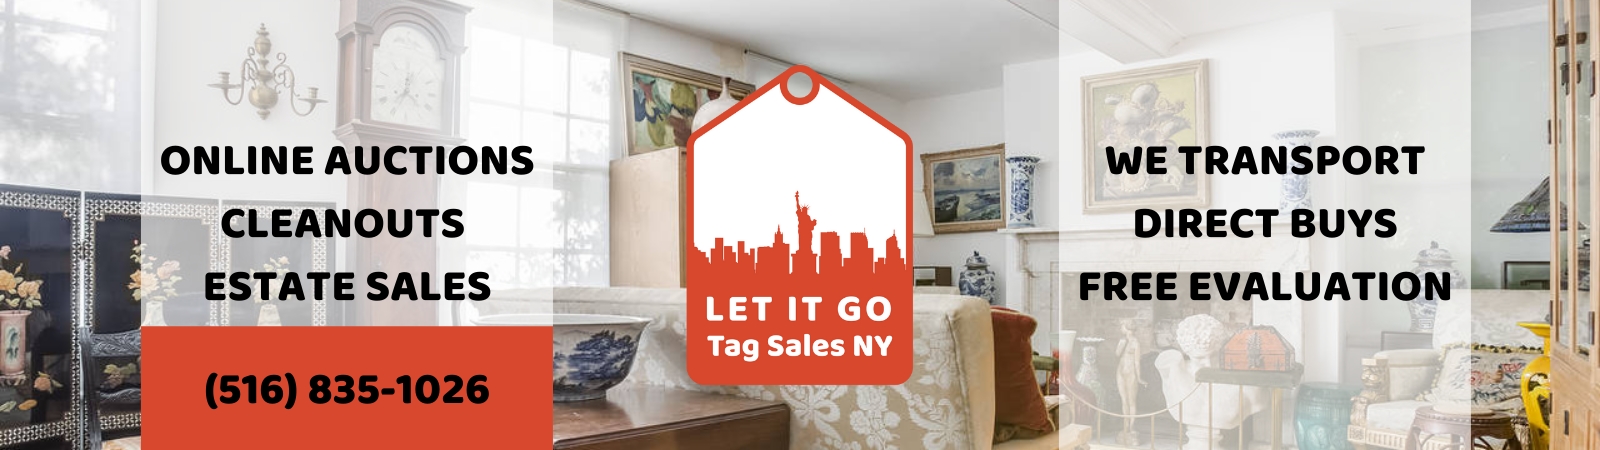 Let It Go Tag Sales | AuctionNinja